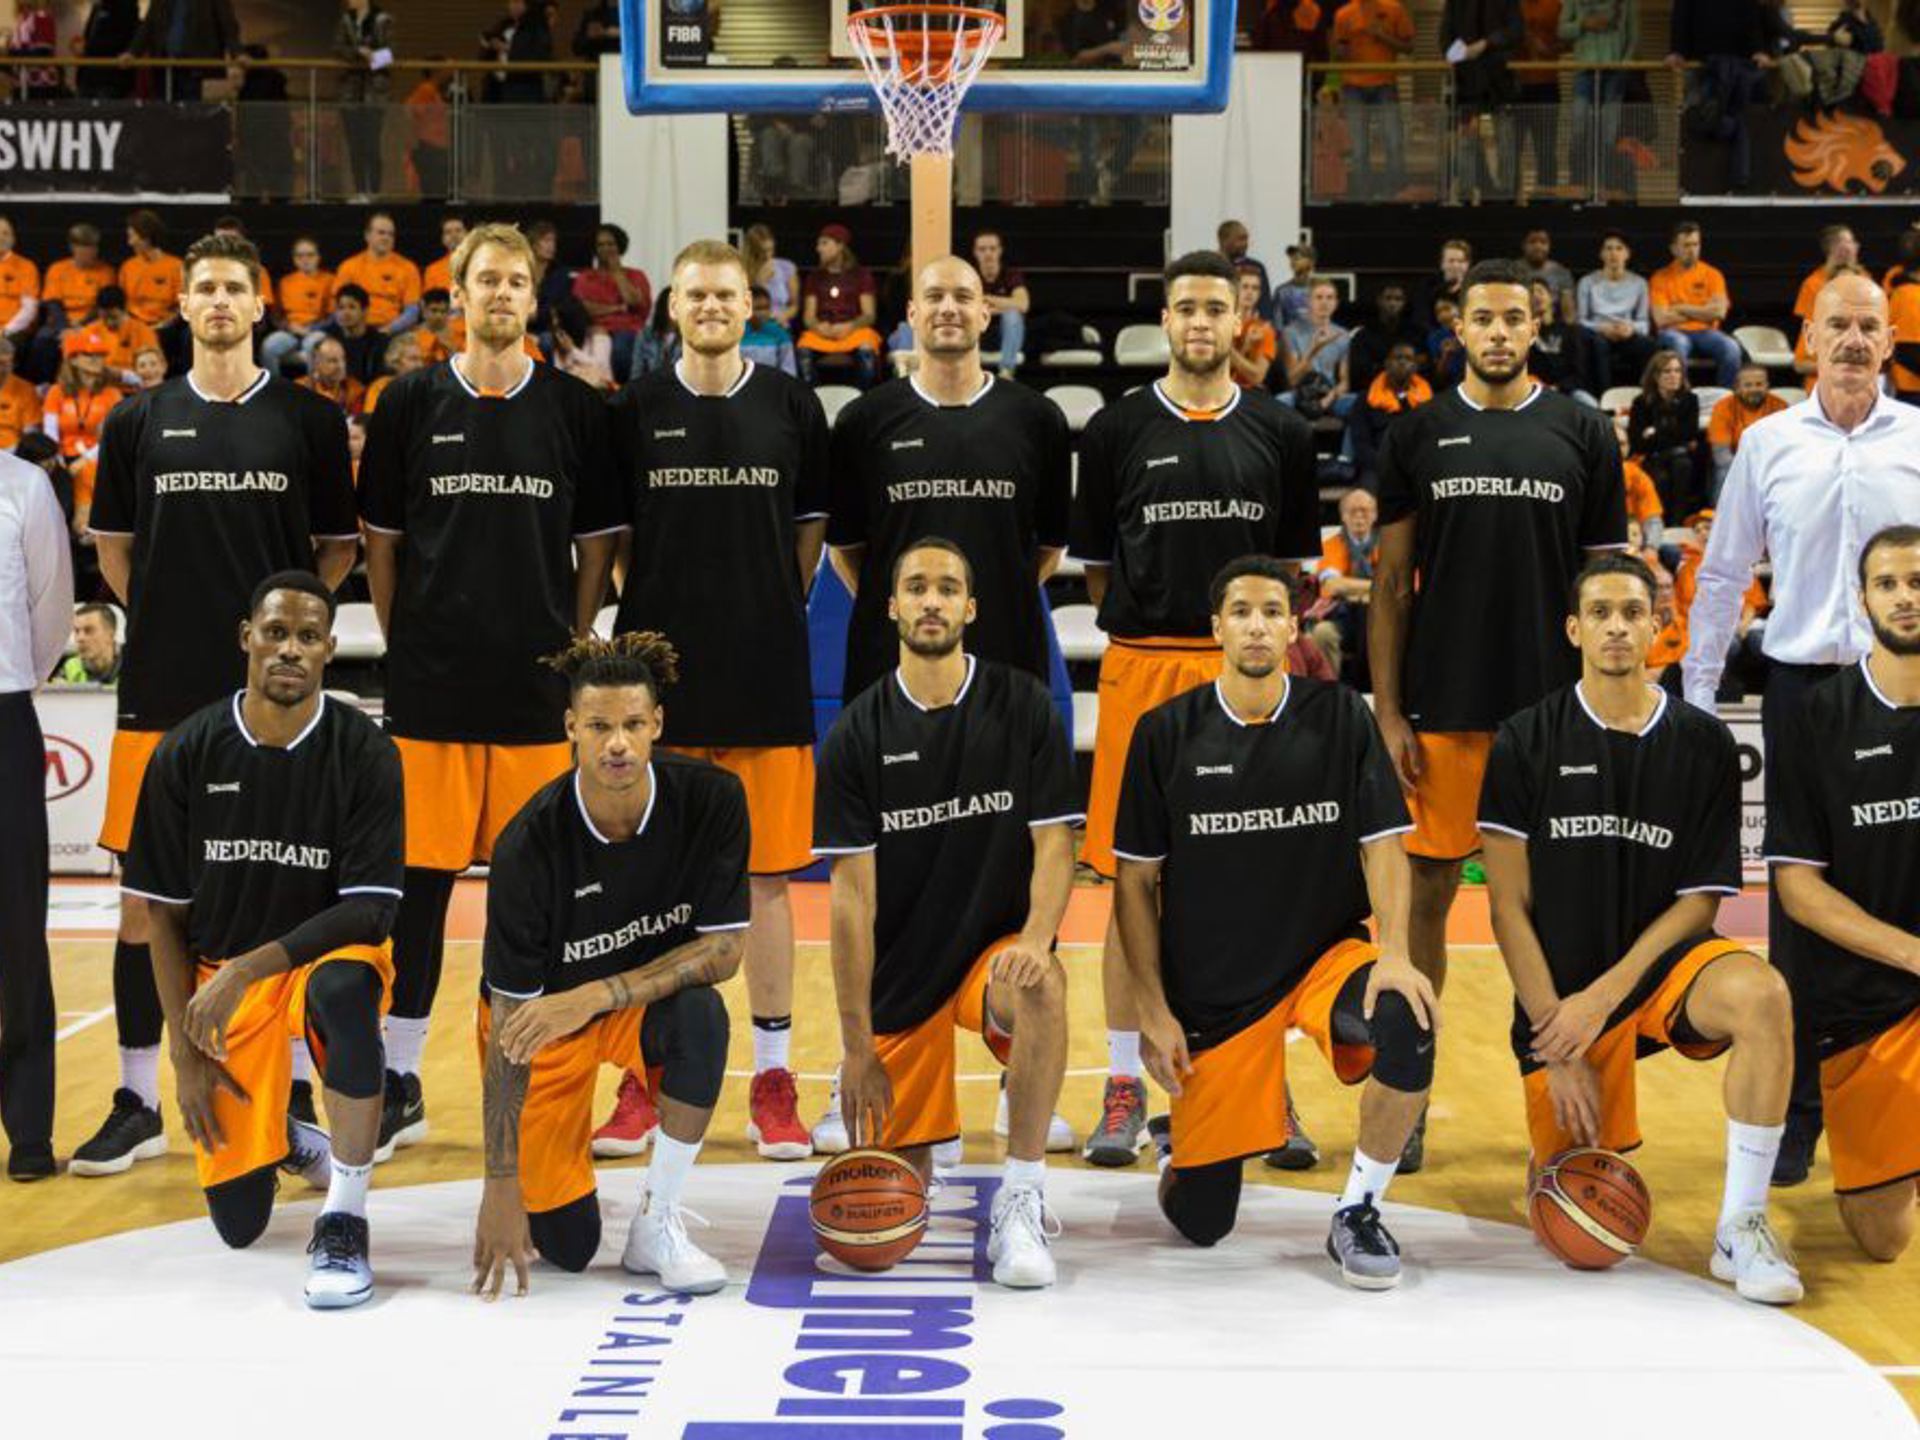 Oranje Basketball team3.jpg (2)